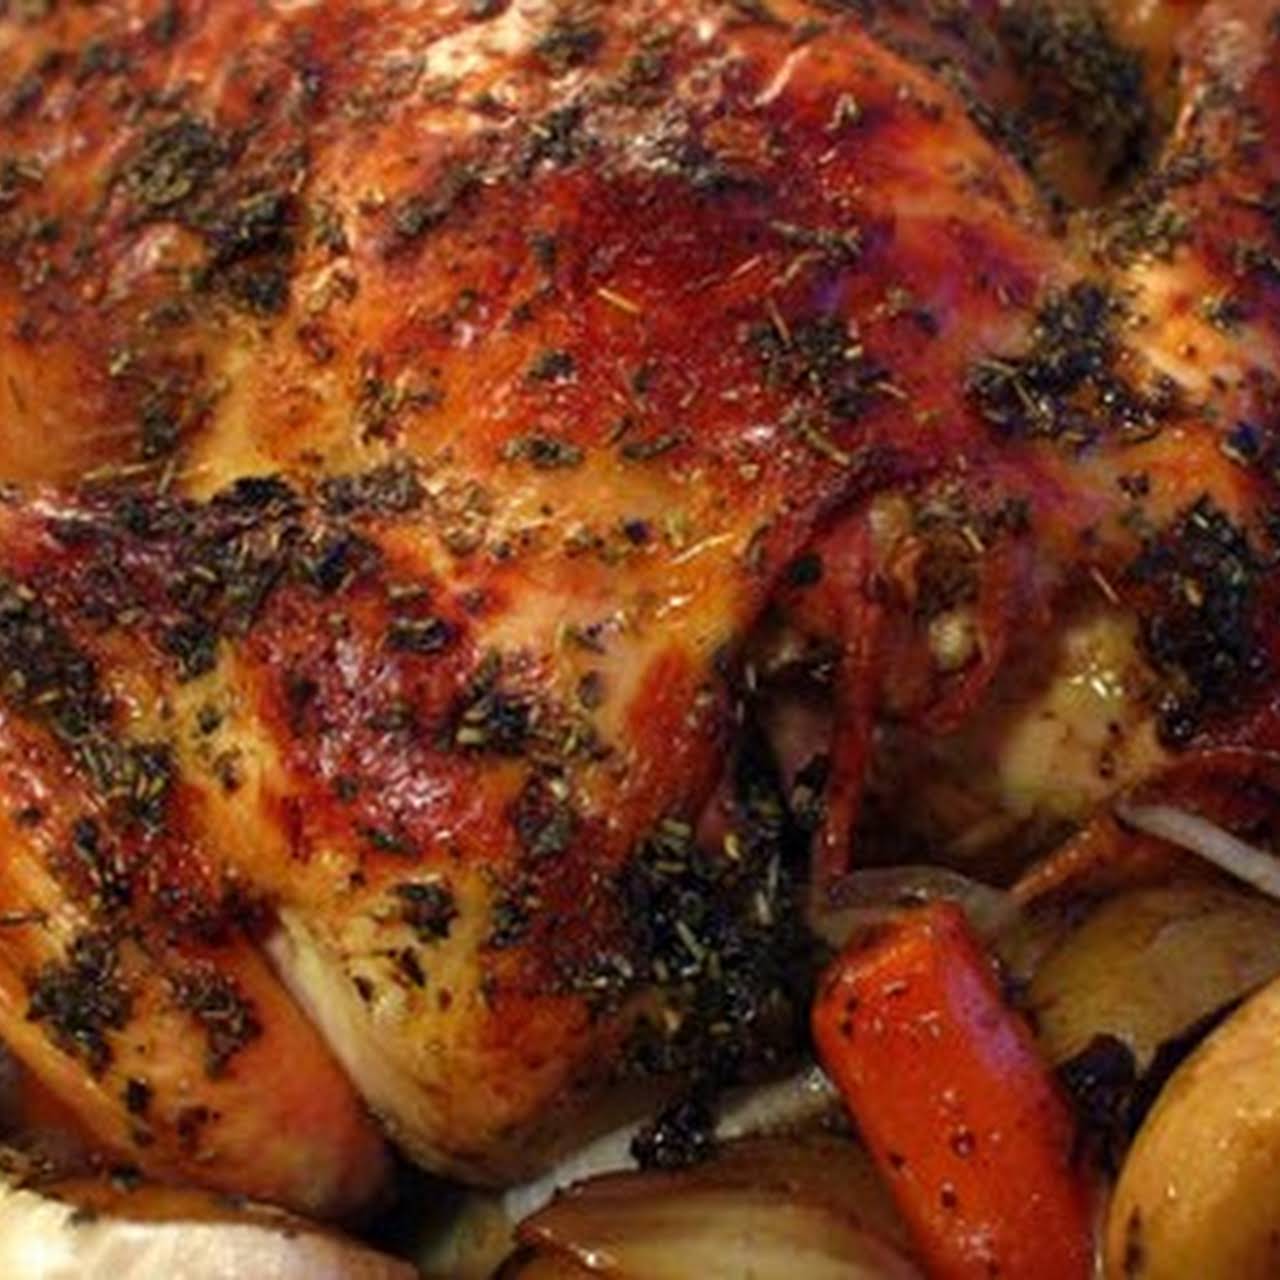 Balsamic Roast Chicken